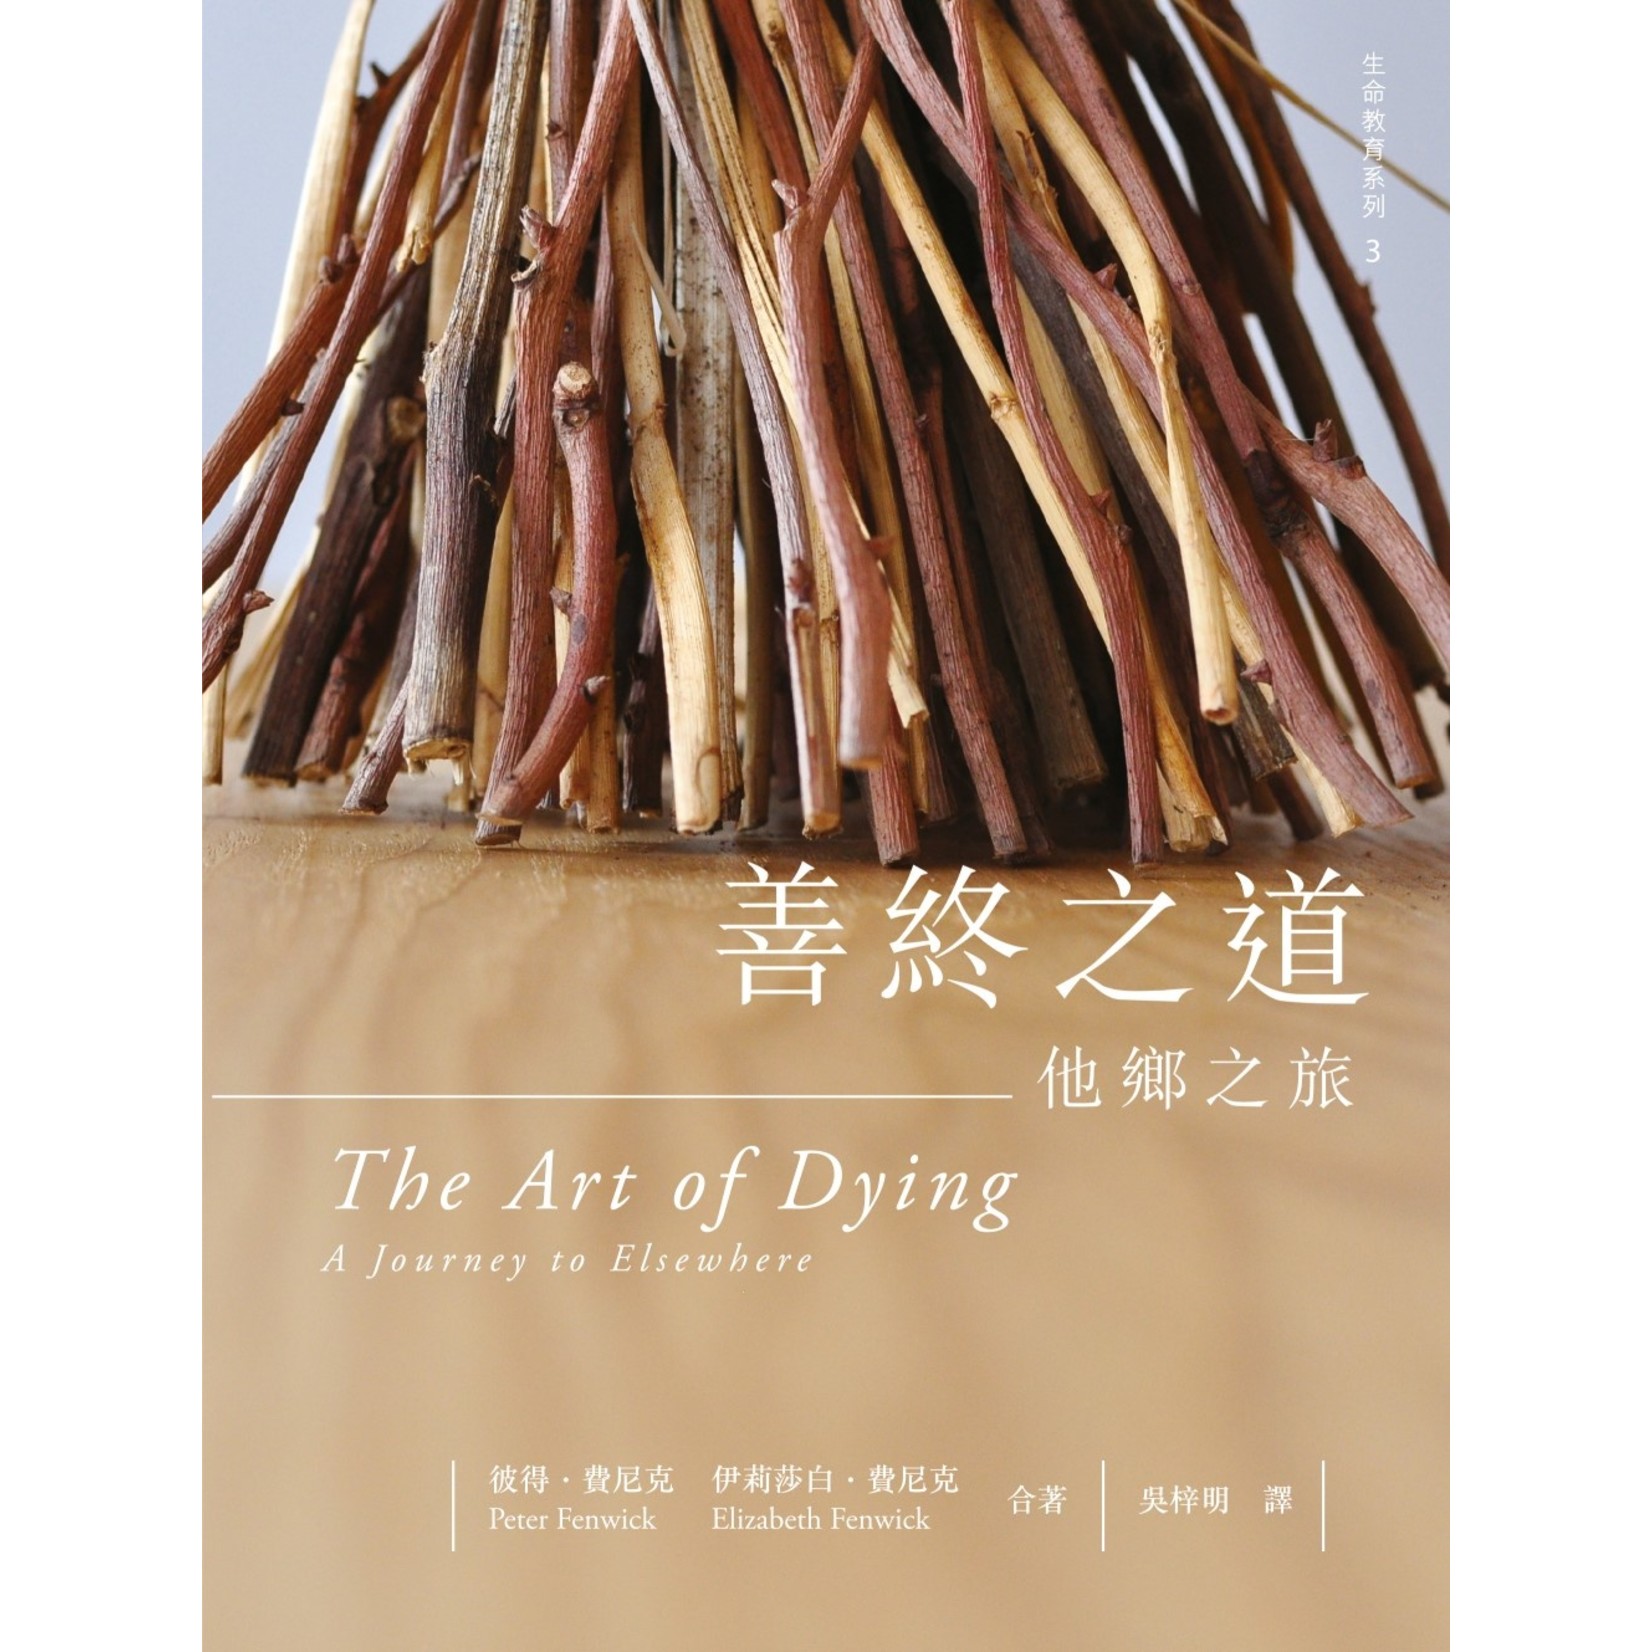 基督教文藝(香港) Chinese Christian Literature Council 善終之道：他鄉之旅 The Art of Dying: A Journey to Elsewhere